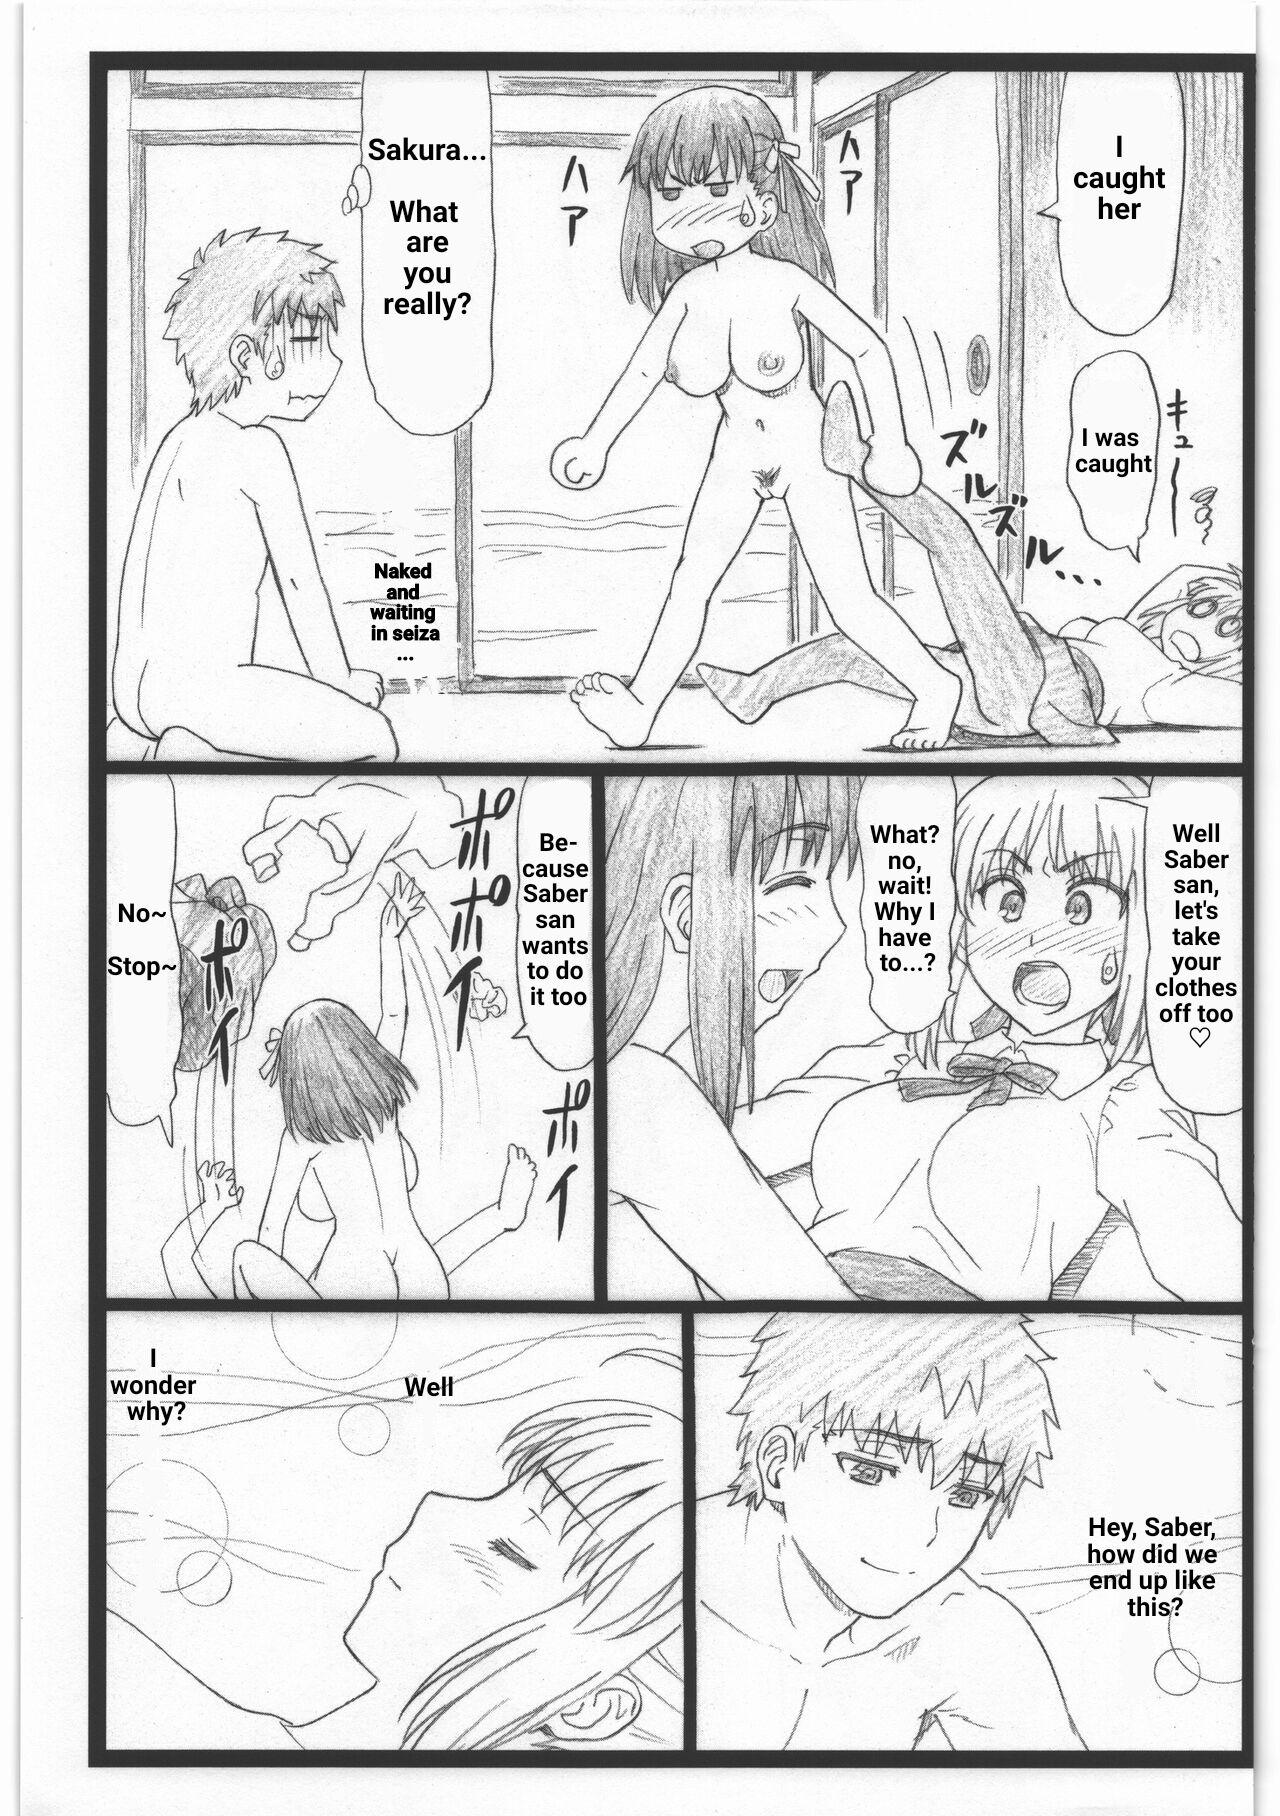 Twerking C88 Omakebon - Fate stay night Exgirlfriend - Page 5